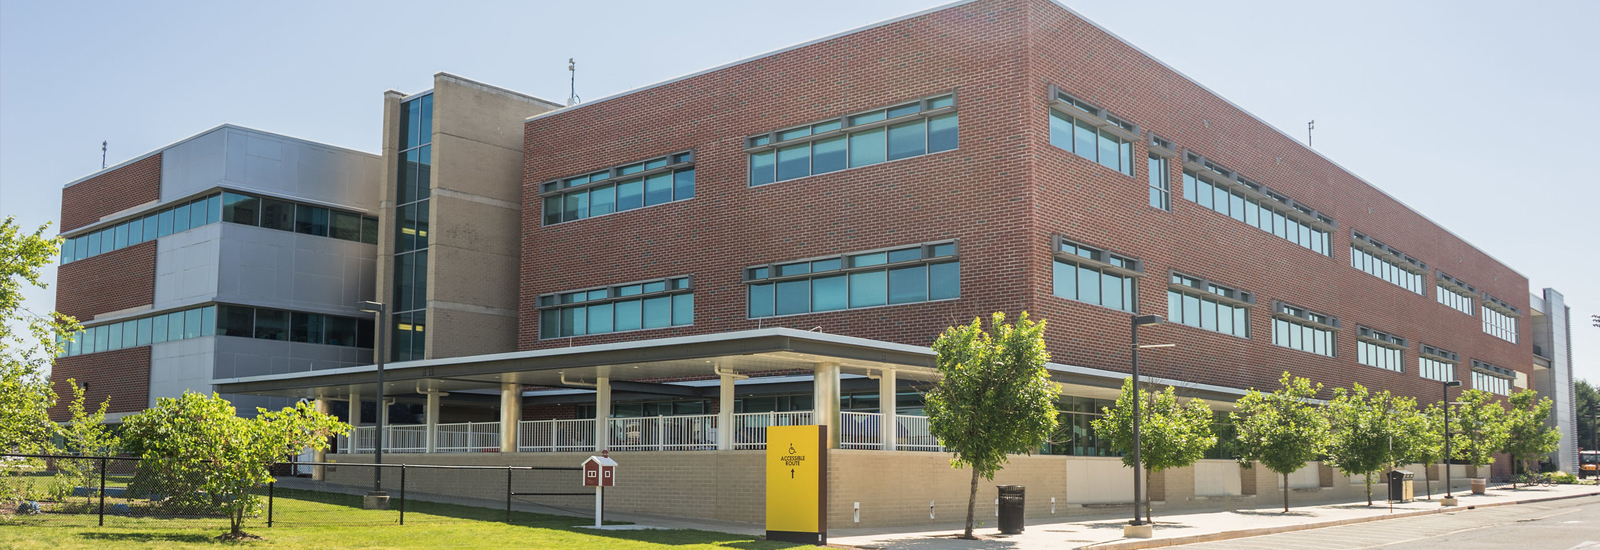 A photo of Rowan University's education building, James Hall.